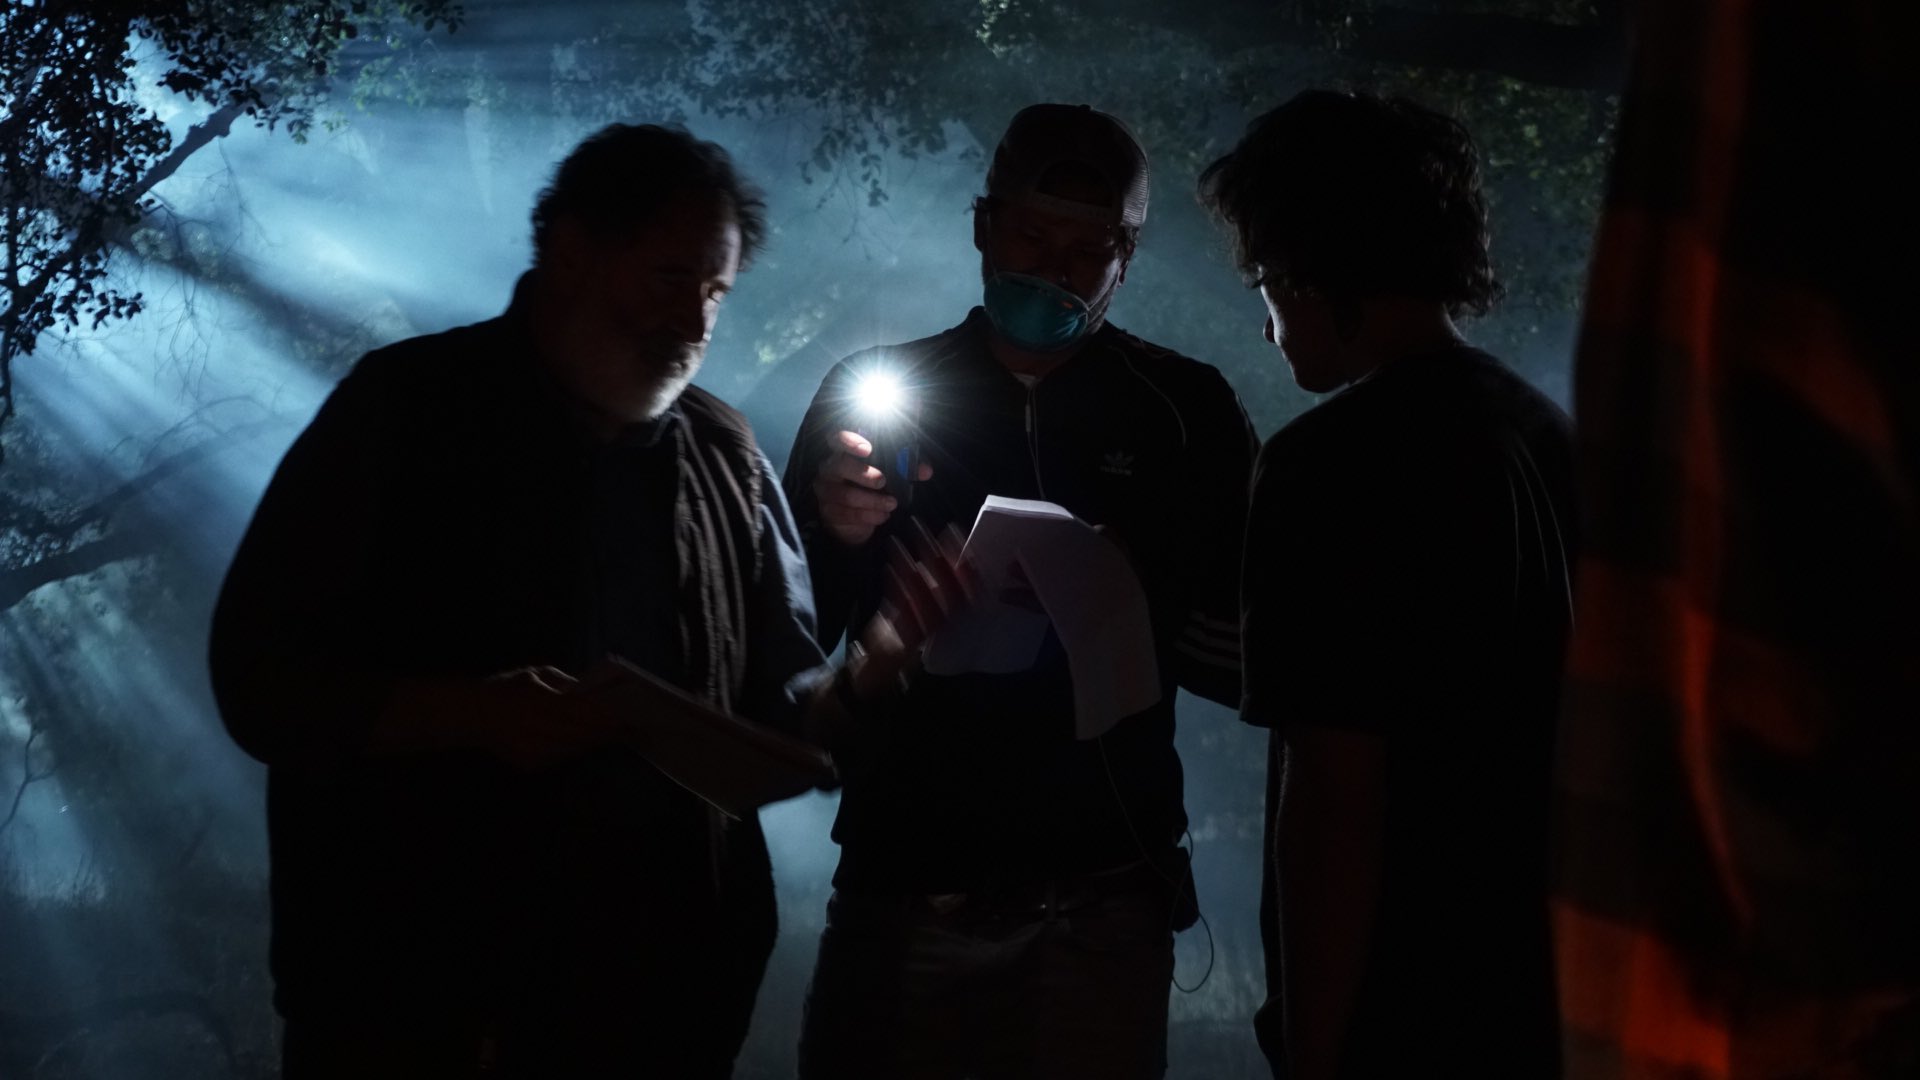  Blink-182's Tom DeLonge directs new UFO conspiracy flick 'Monsters of California' (video)  